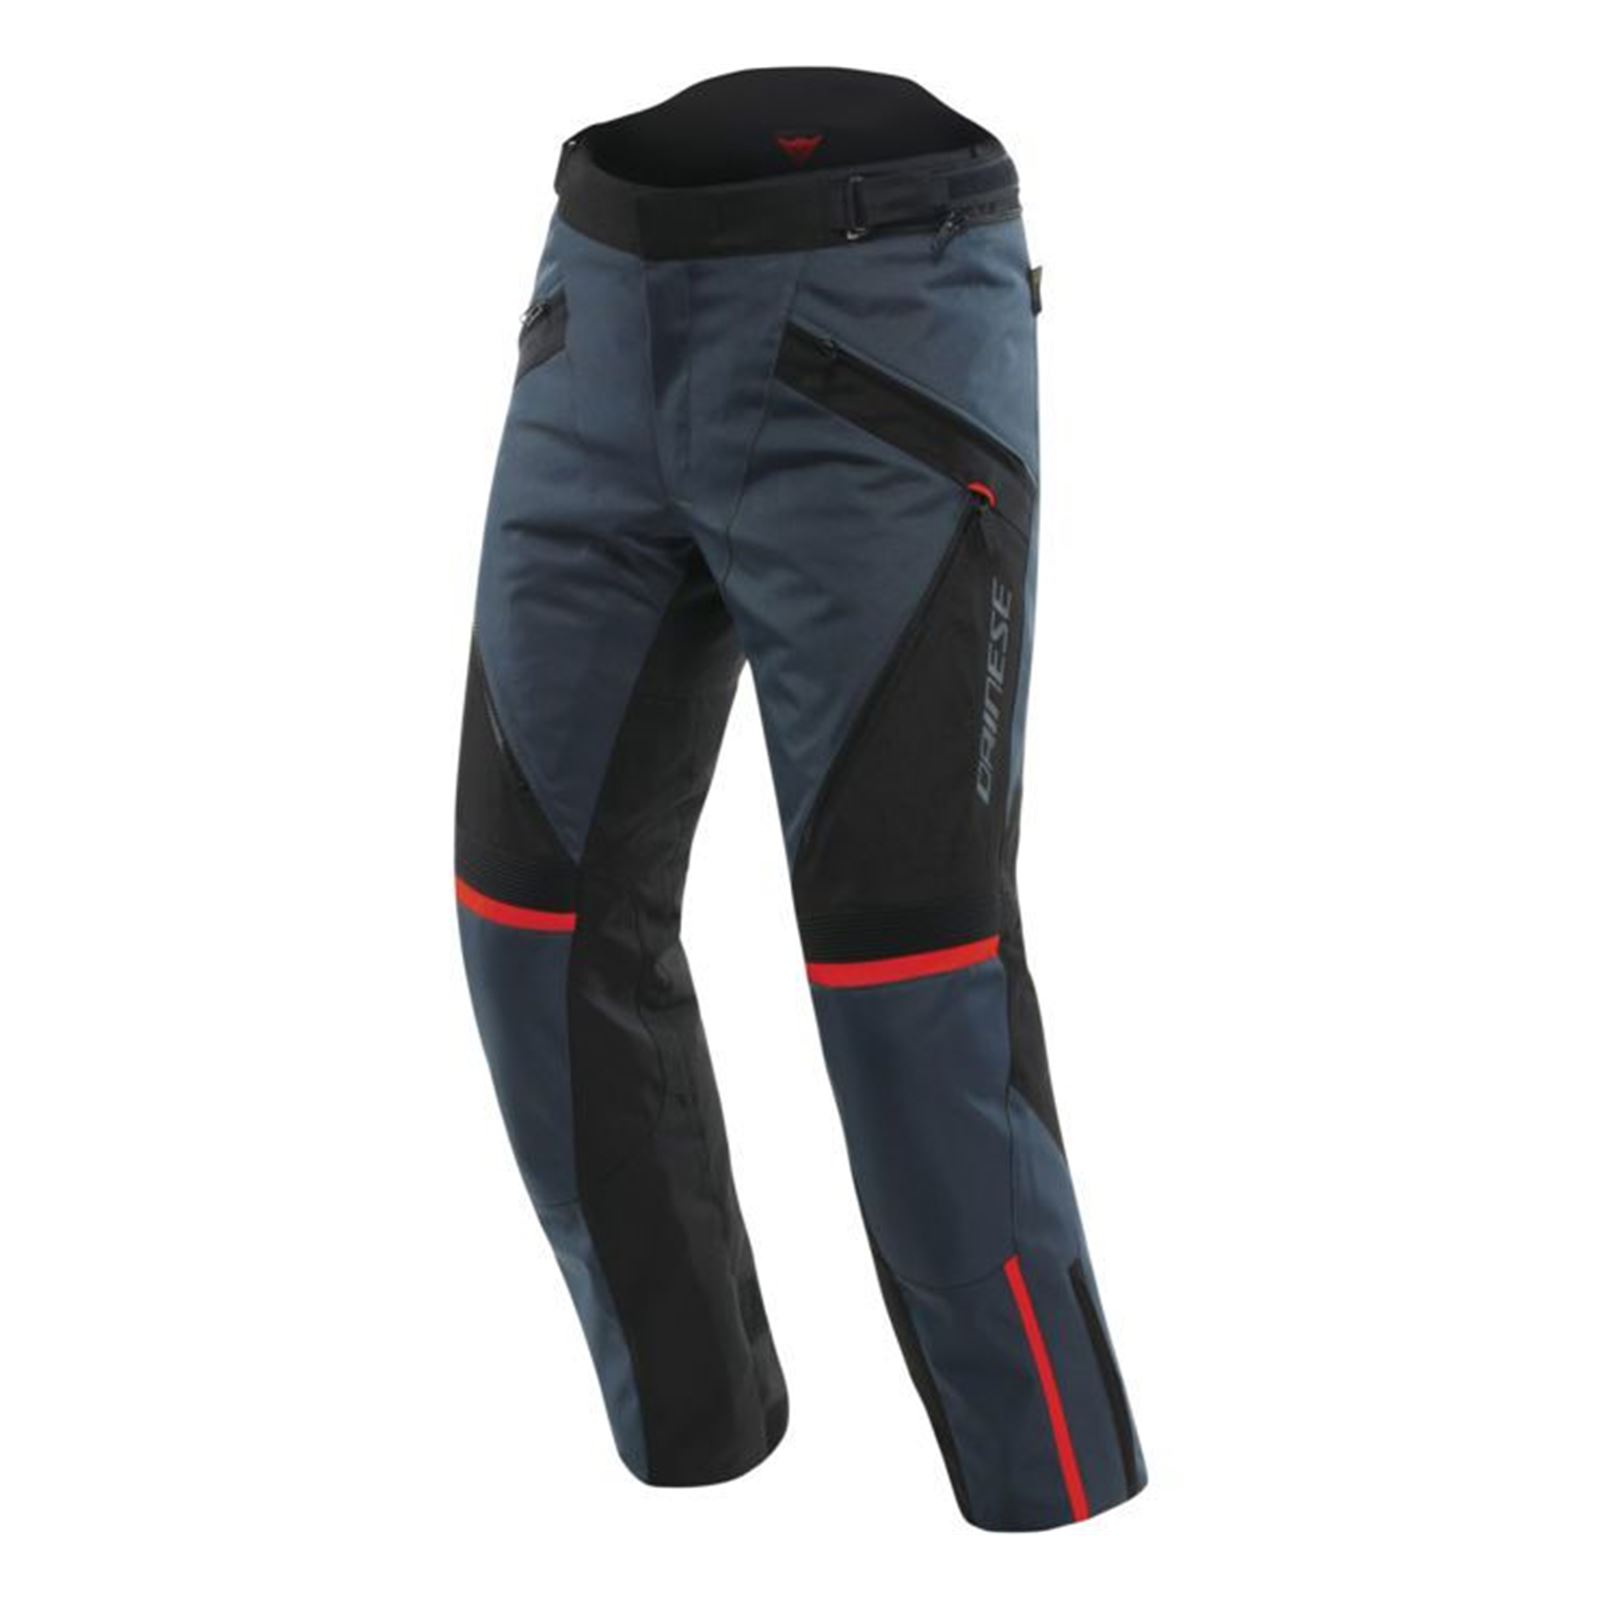 Dainese Men's Tempest 3 D-Dry Pants - Size 46 - Black/Red